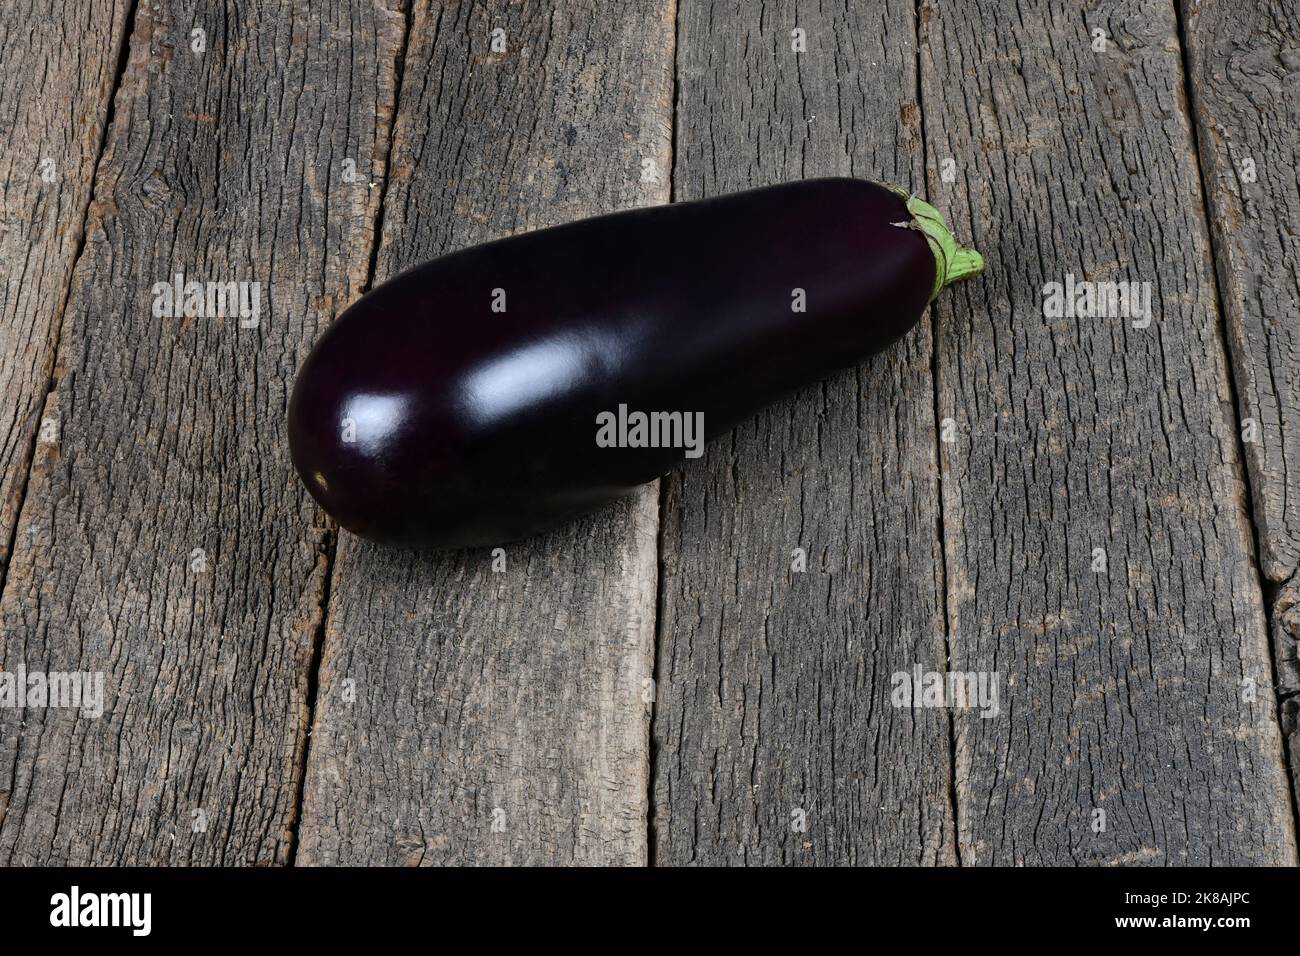 Ripe juicy eggplant on dark wood background. High resolution photo. Full depth of field. Stock Photo